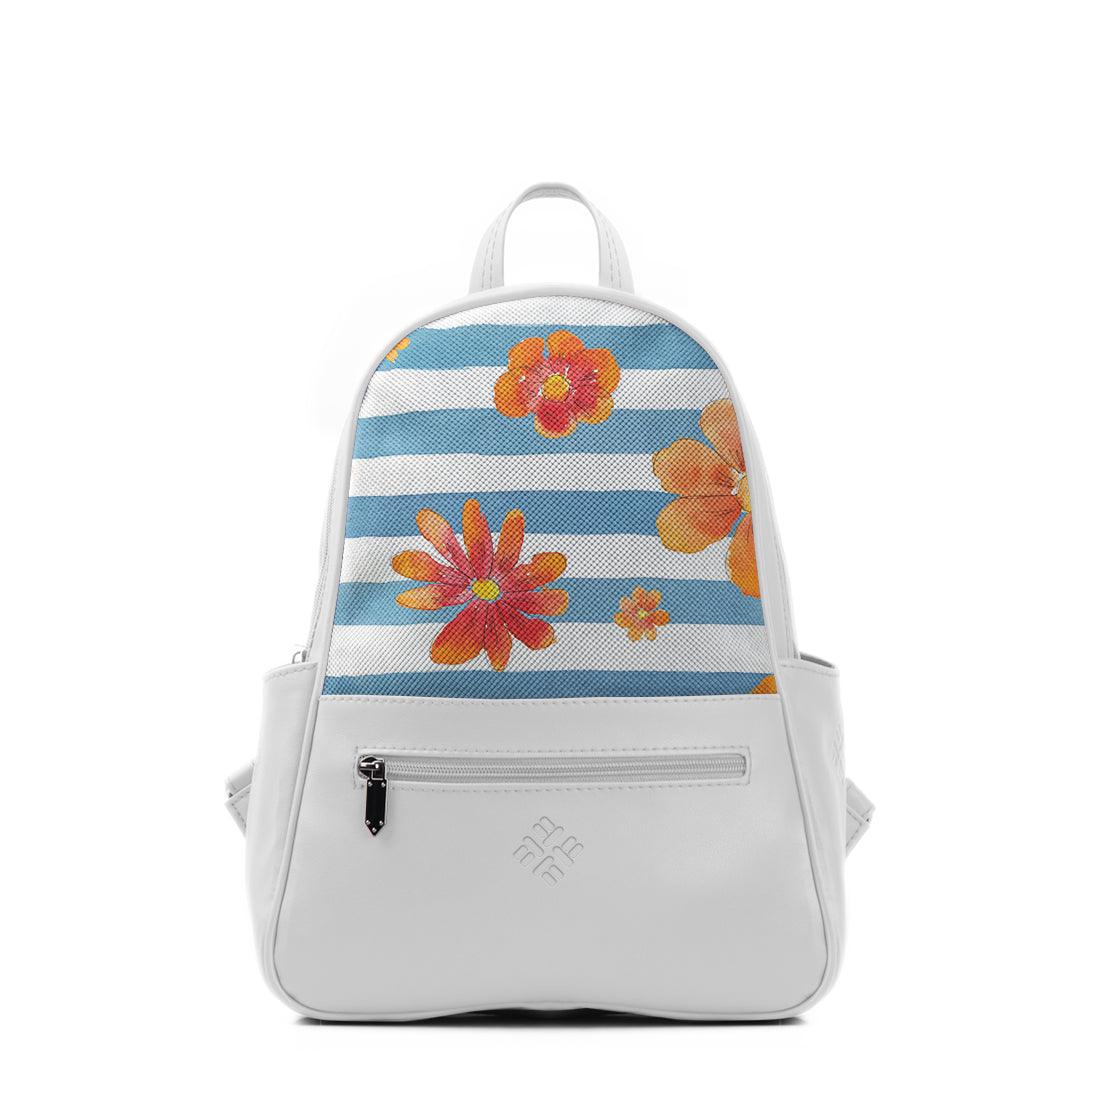 White Vivid Backpack Blue Floral - CANVAEGYPT